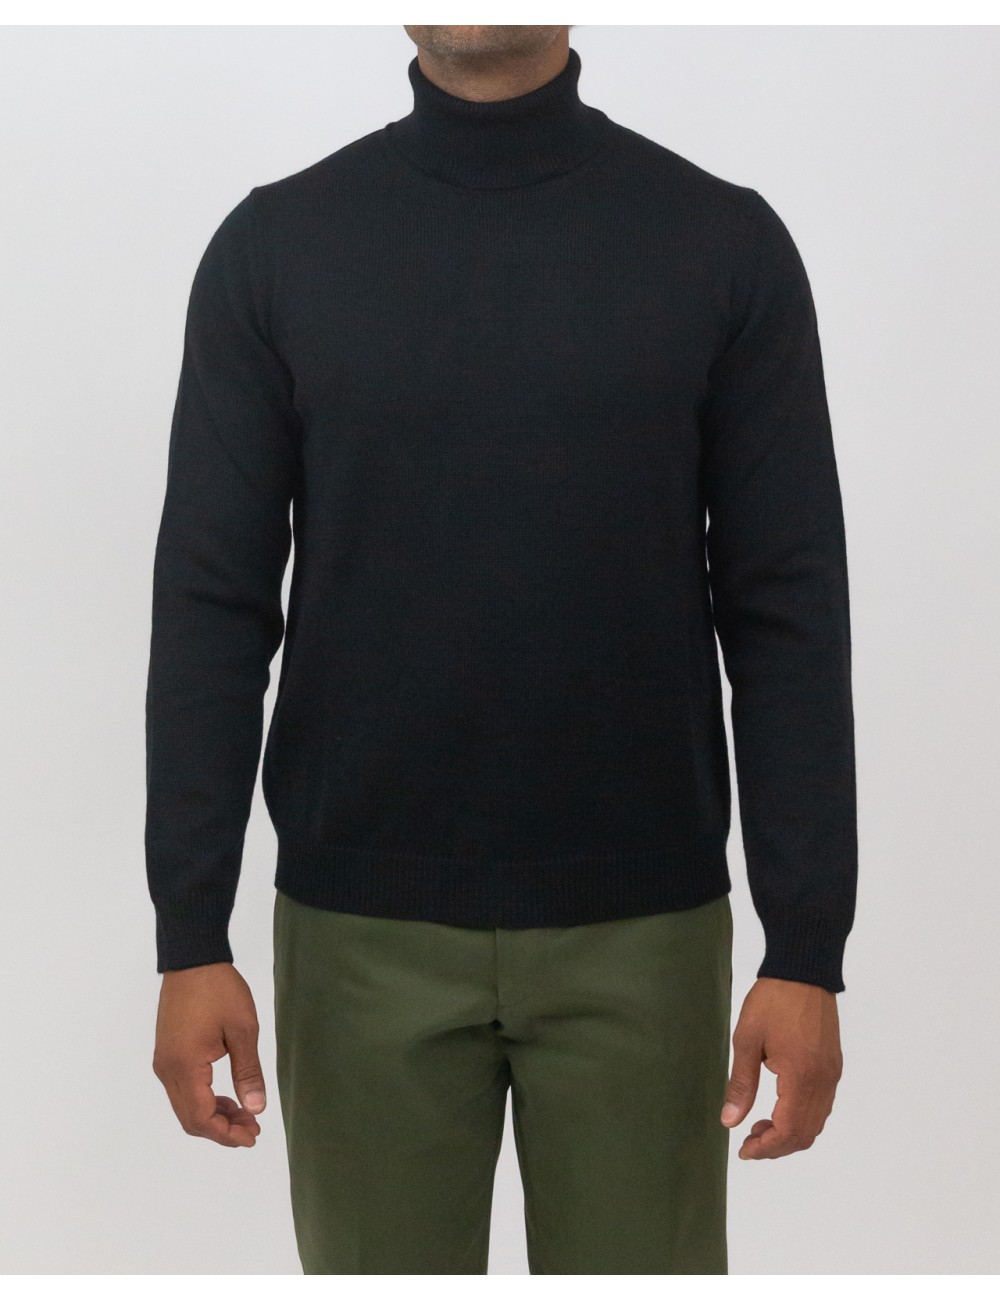 Roberto Collina - Men's Black Turtleneck Sweater RP02203 09 NERO I23